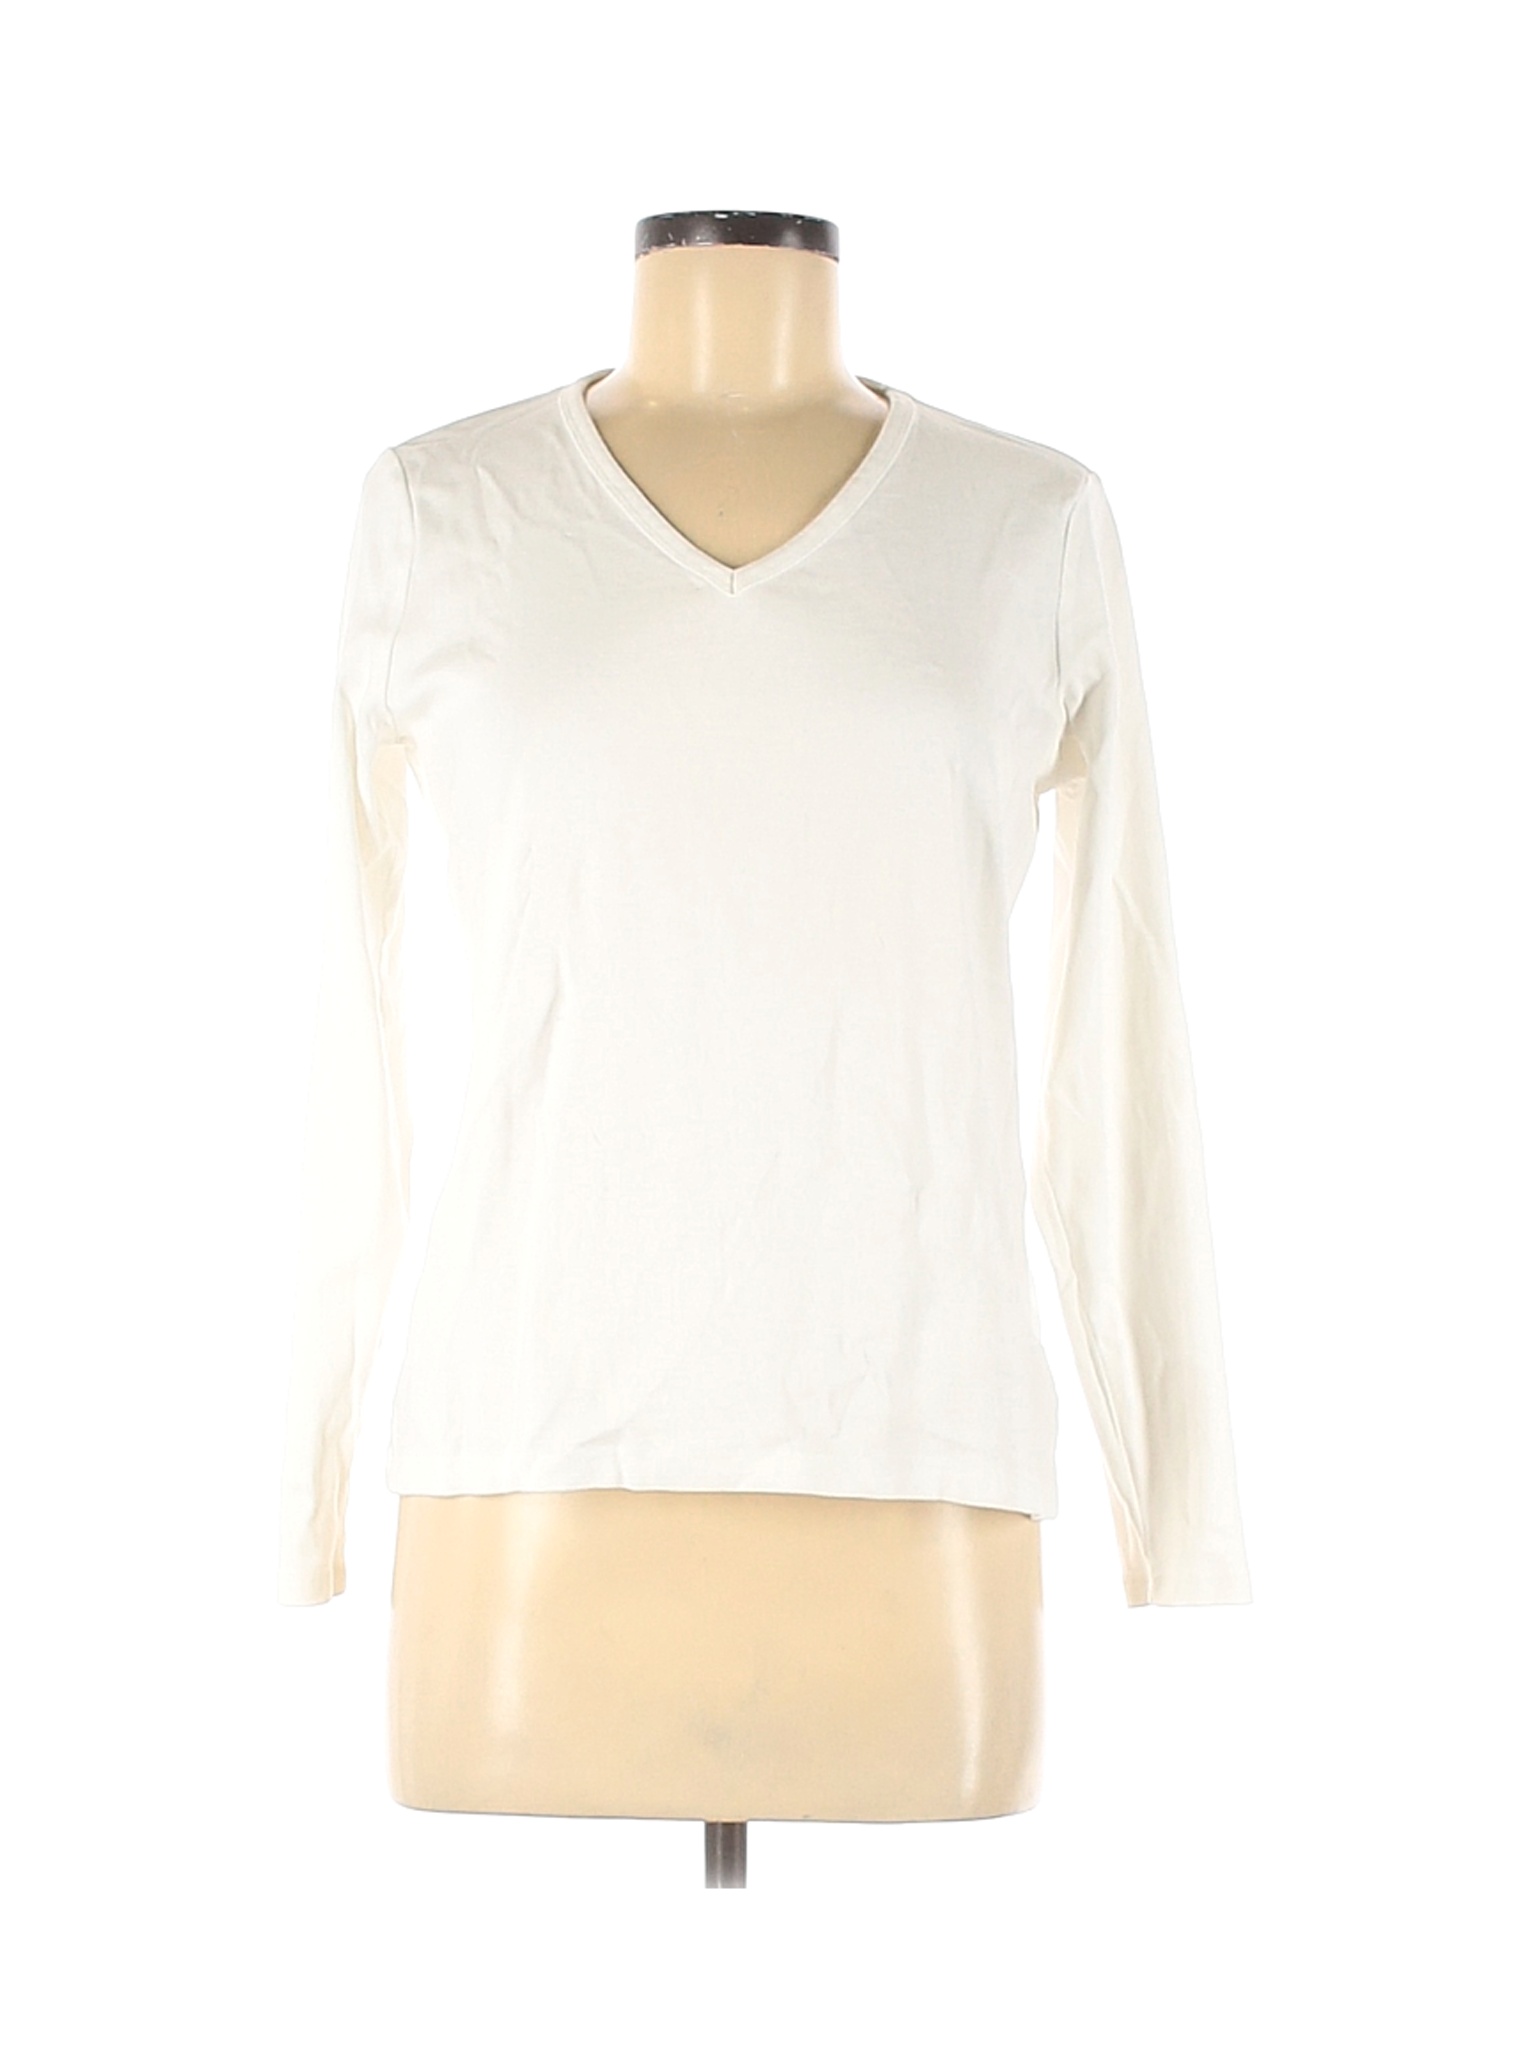 Lands' End Women White Long Sleeve T-Shirt M | eBay